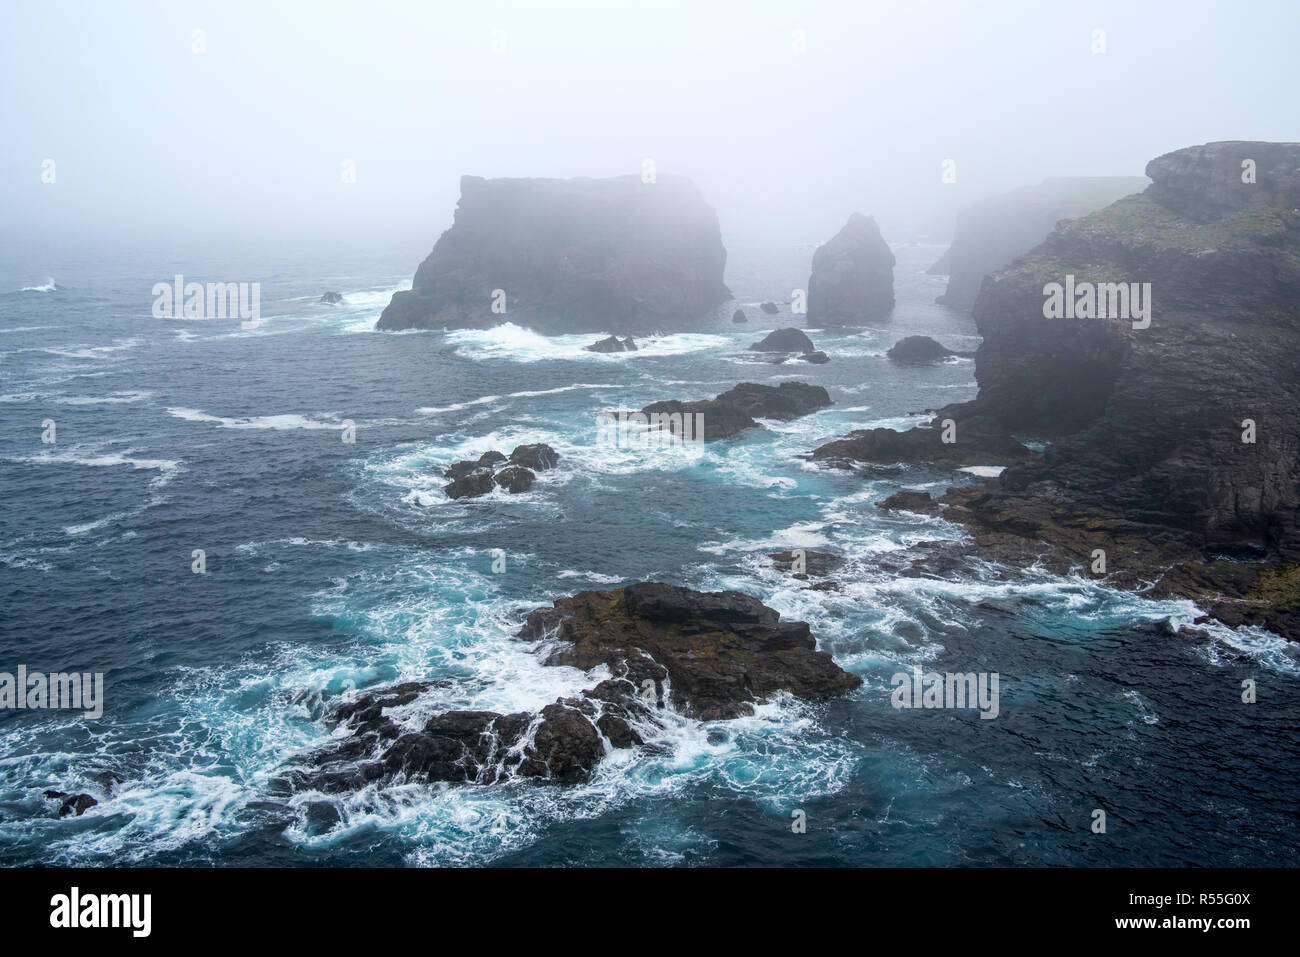 Sea stacks and sea cliffs in mist during stormy weather at Eshaness / Esha Ness, peninsula in Northmavine, Mainland, Shetland Islands, Scotland, UK Stock Photo